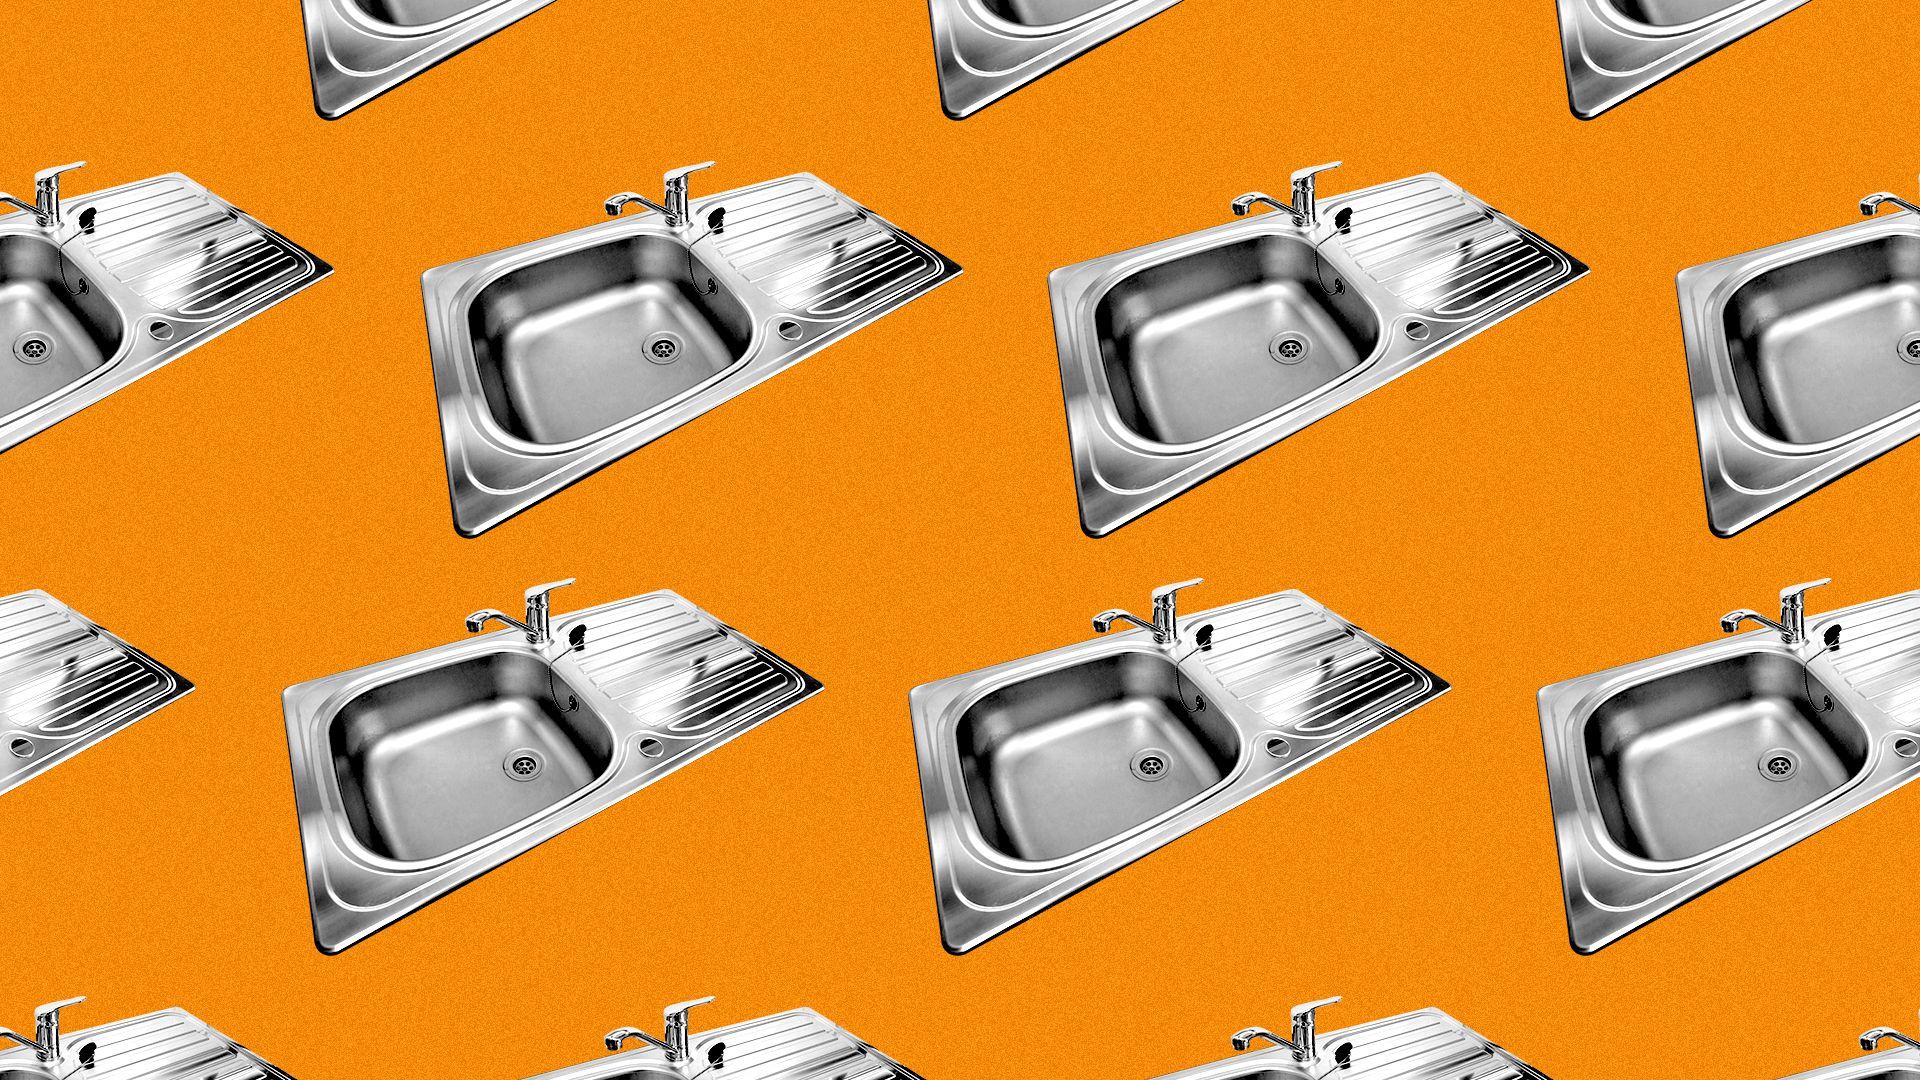 Illustration of a pattern of kitchen sinks.